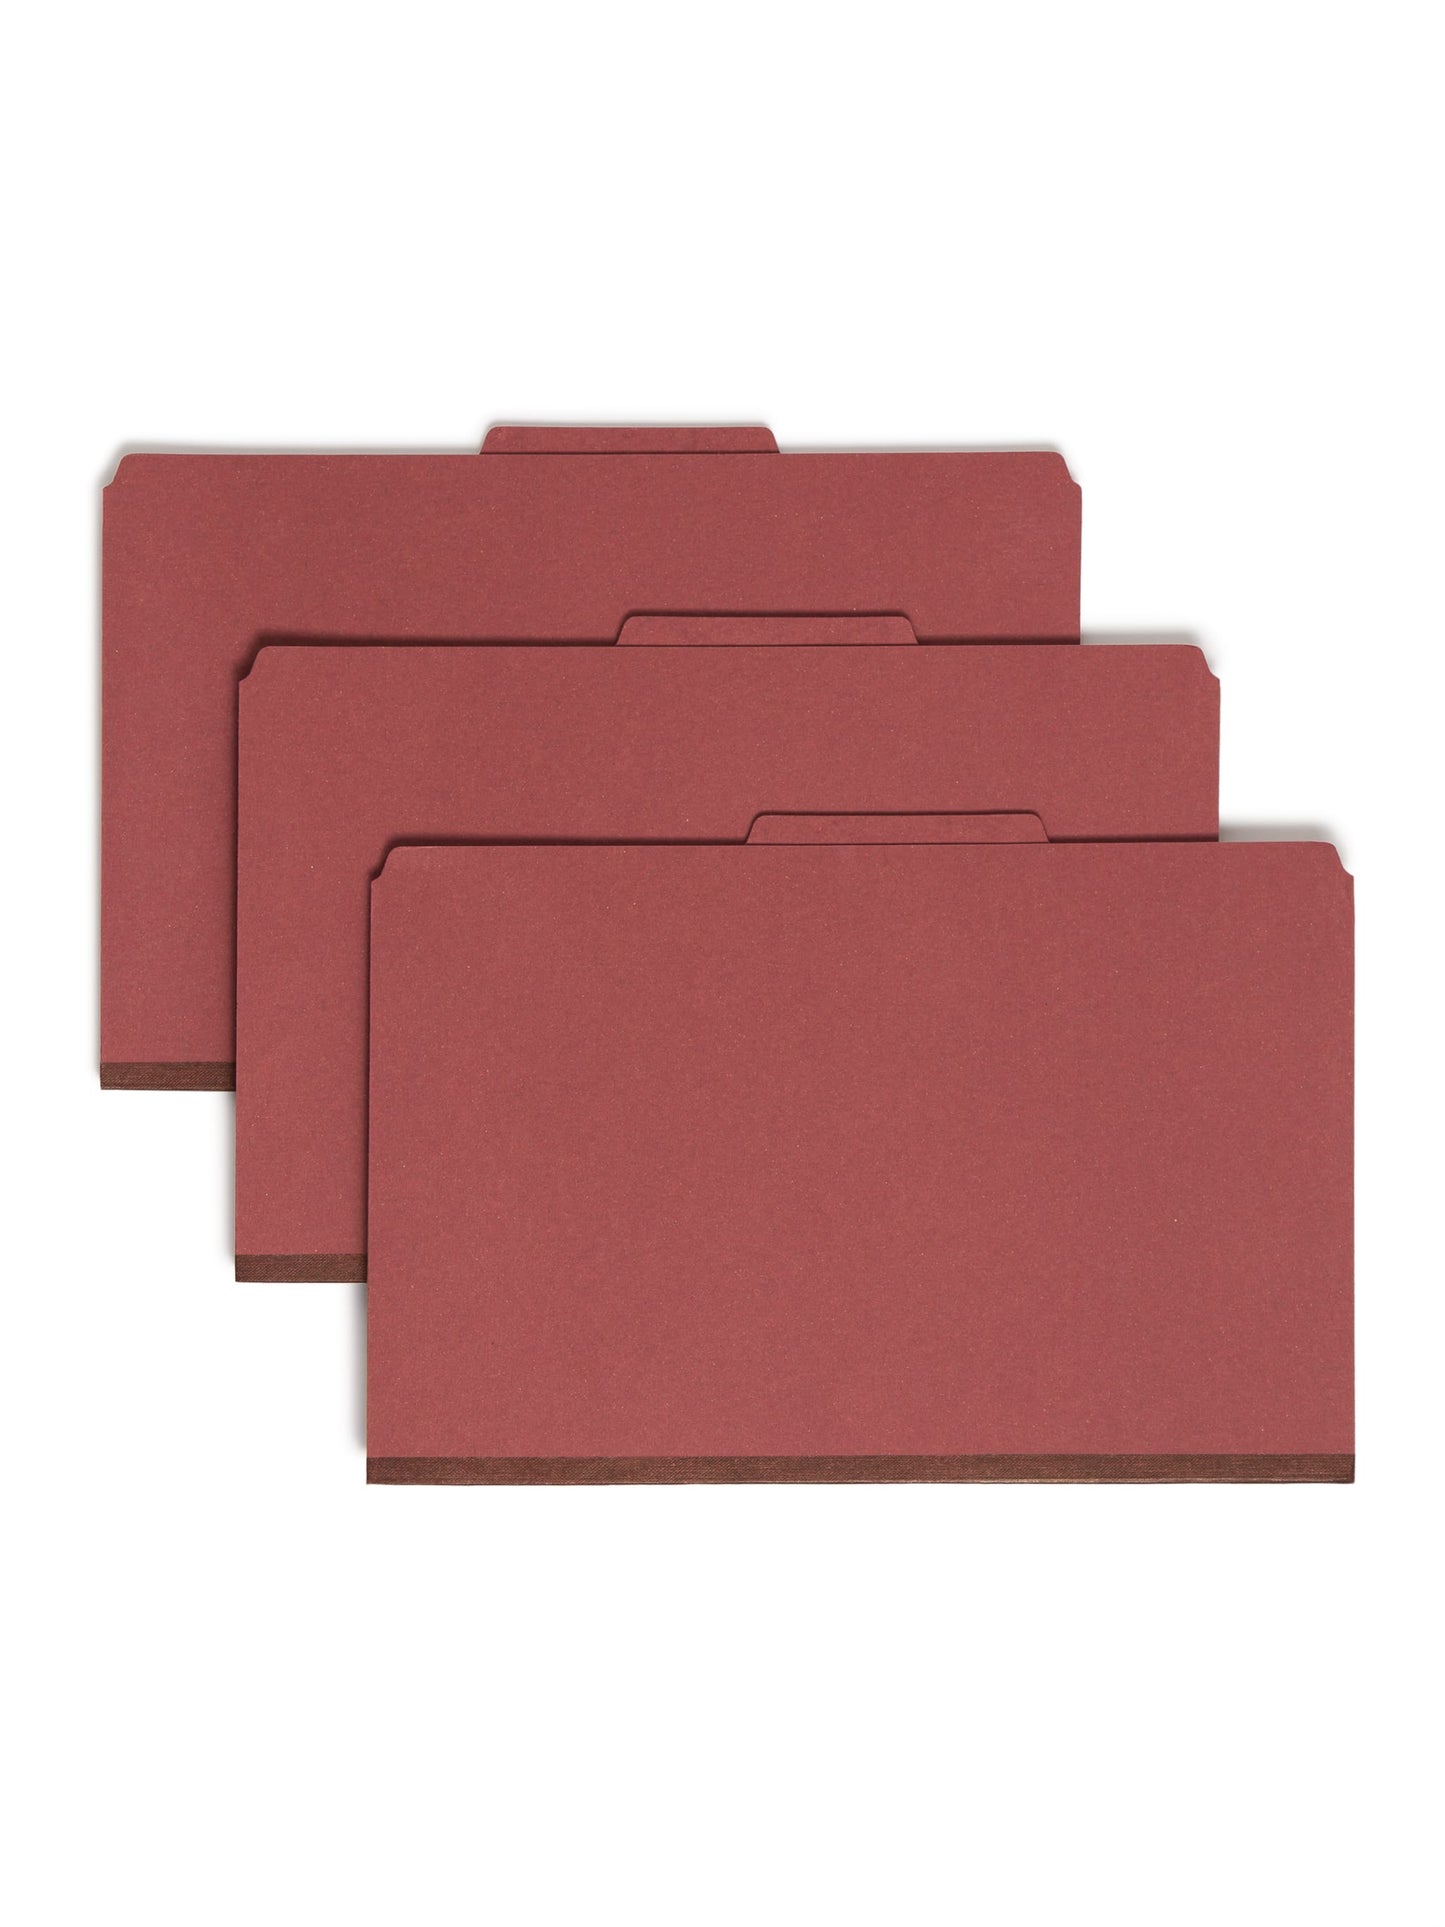 SafeSHIELD® Pressboard Classification File Folders with Pocket Dividers, Red Color, Legal Size, Set of 0, 30086486190795